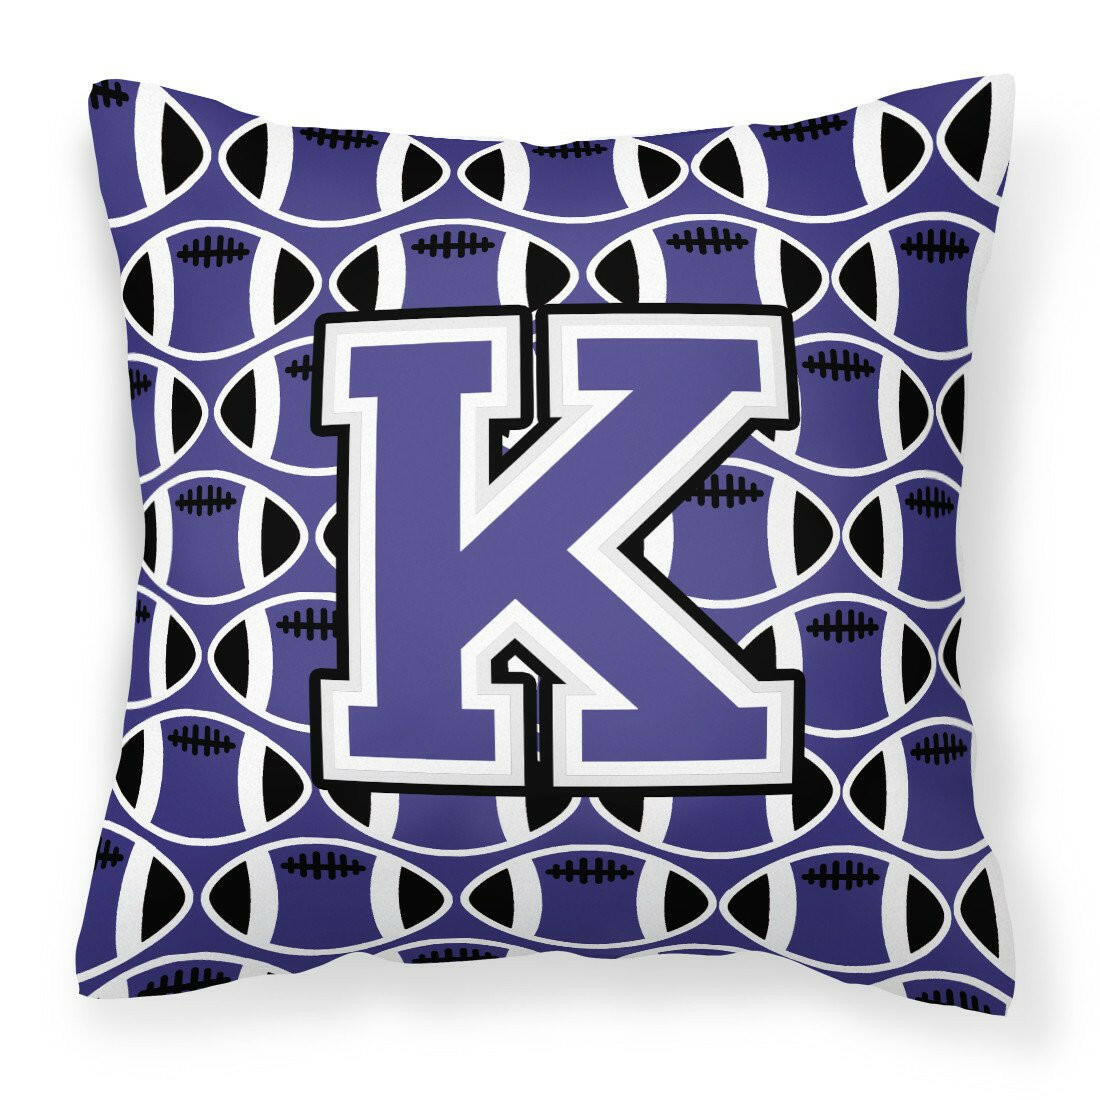 Letter K Football Purple and White Fabric Decorative Pillow CJ1068-KPW1414 by Caroline's Treasures